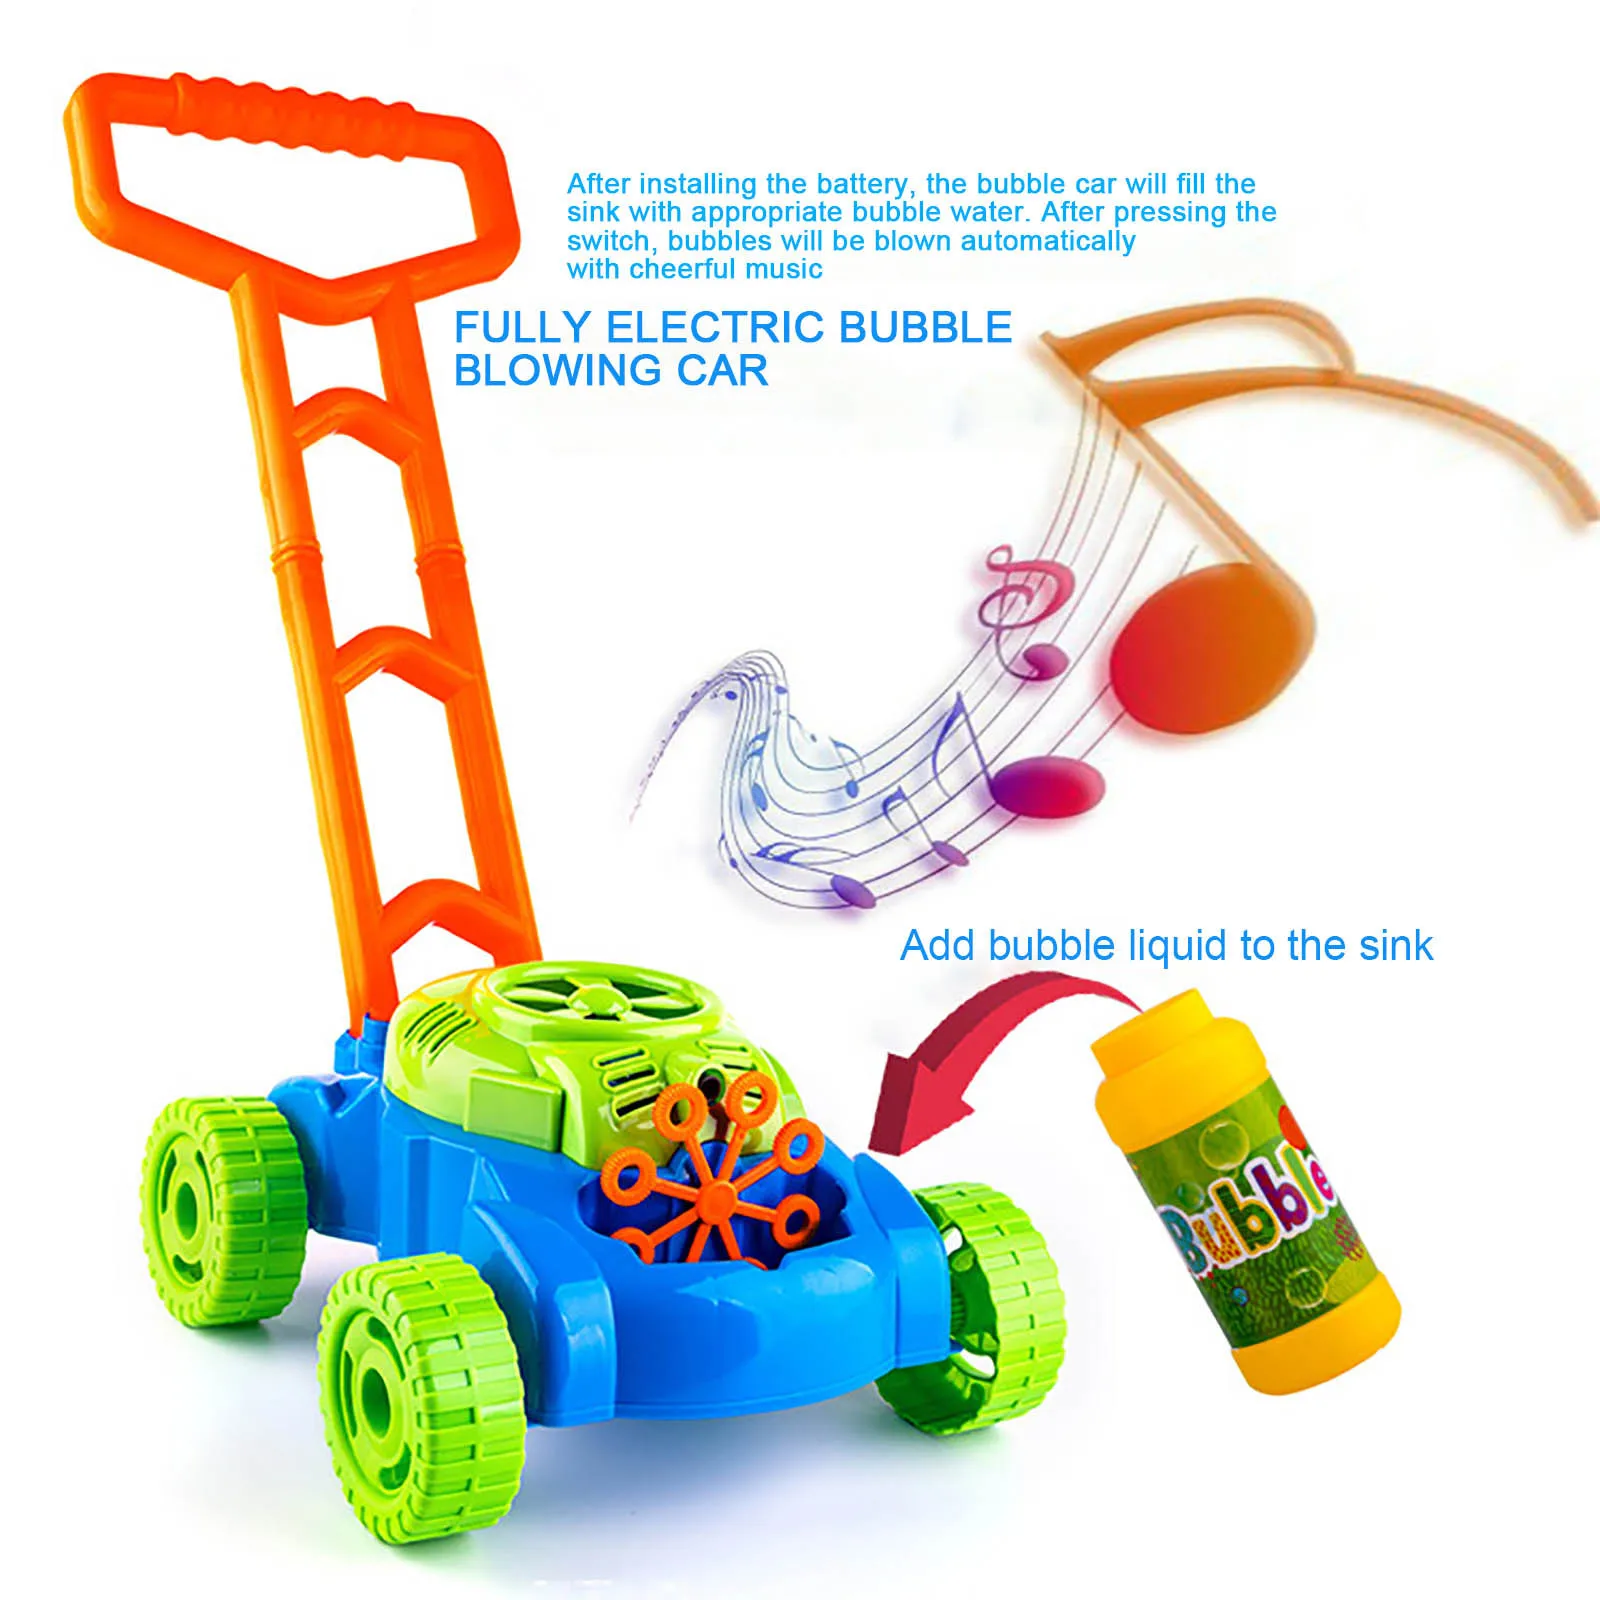 1000 Bubbles Per Minute Portable Bubble Maker for Kids Toddlers 3 AA Batteries Needed JMe Bubble Machine Automatic Bubble Blower Lawn Mower with 6 Bubble Wands and Bubble Refill Bottle 